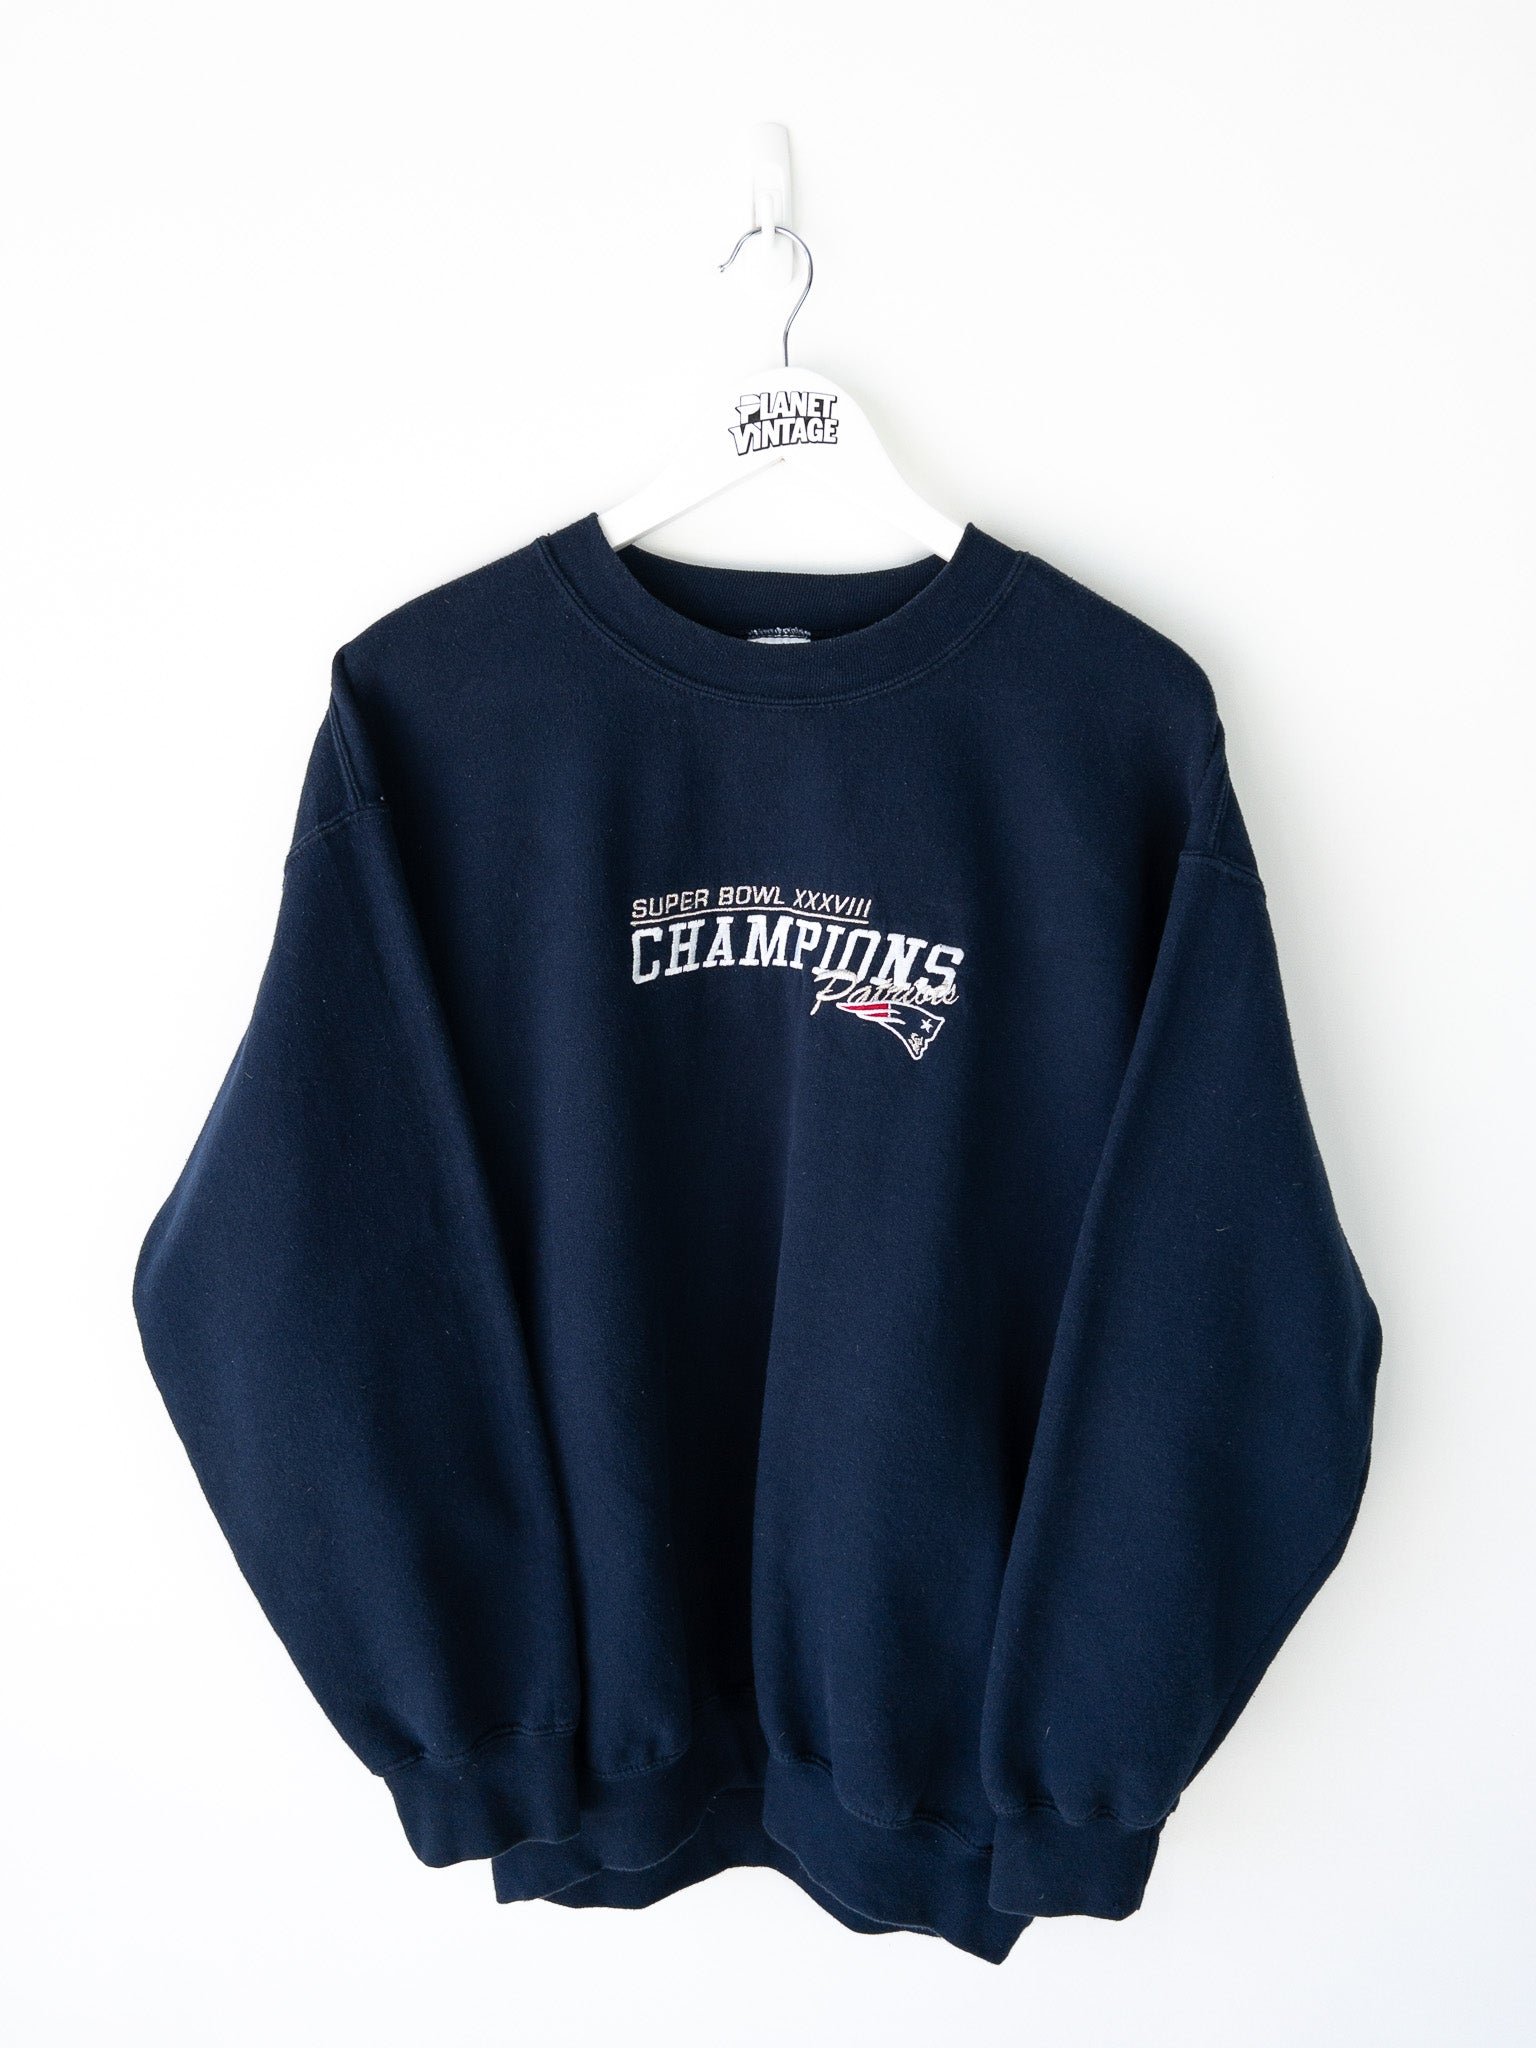 Vintage New England Patriots Sweatshirt (L)